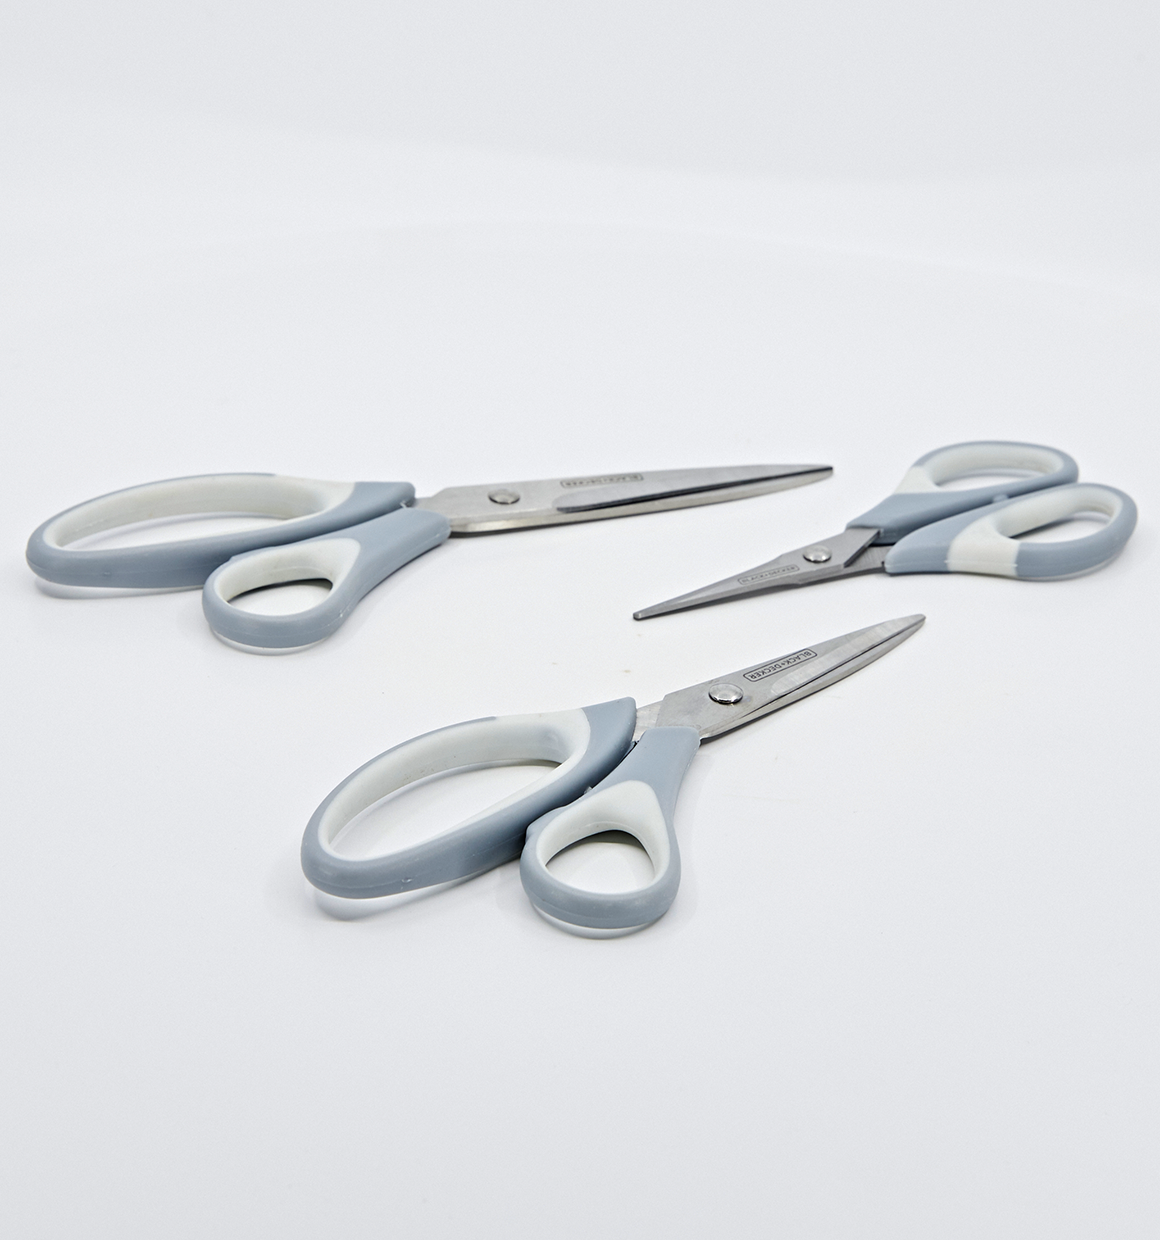 Kai 8.5 Left-Handed Dressmaking Scissors - The Confident Stitch